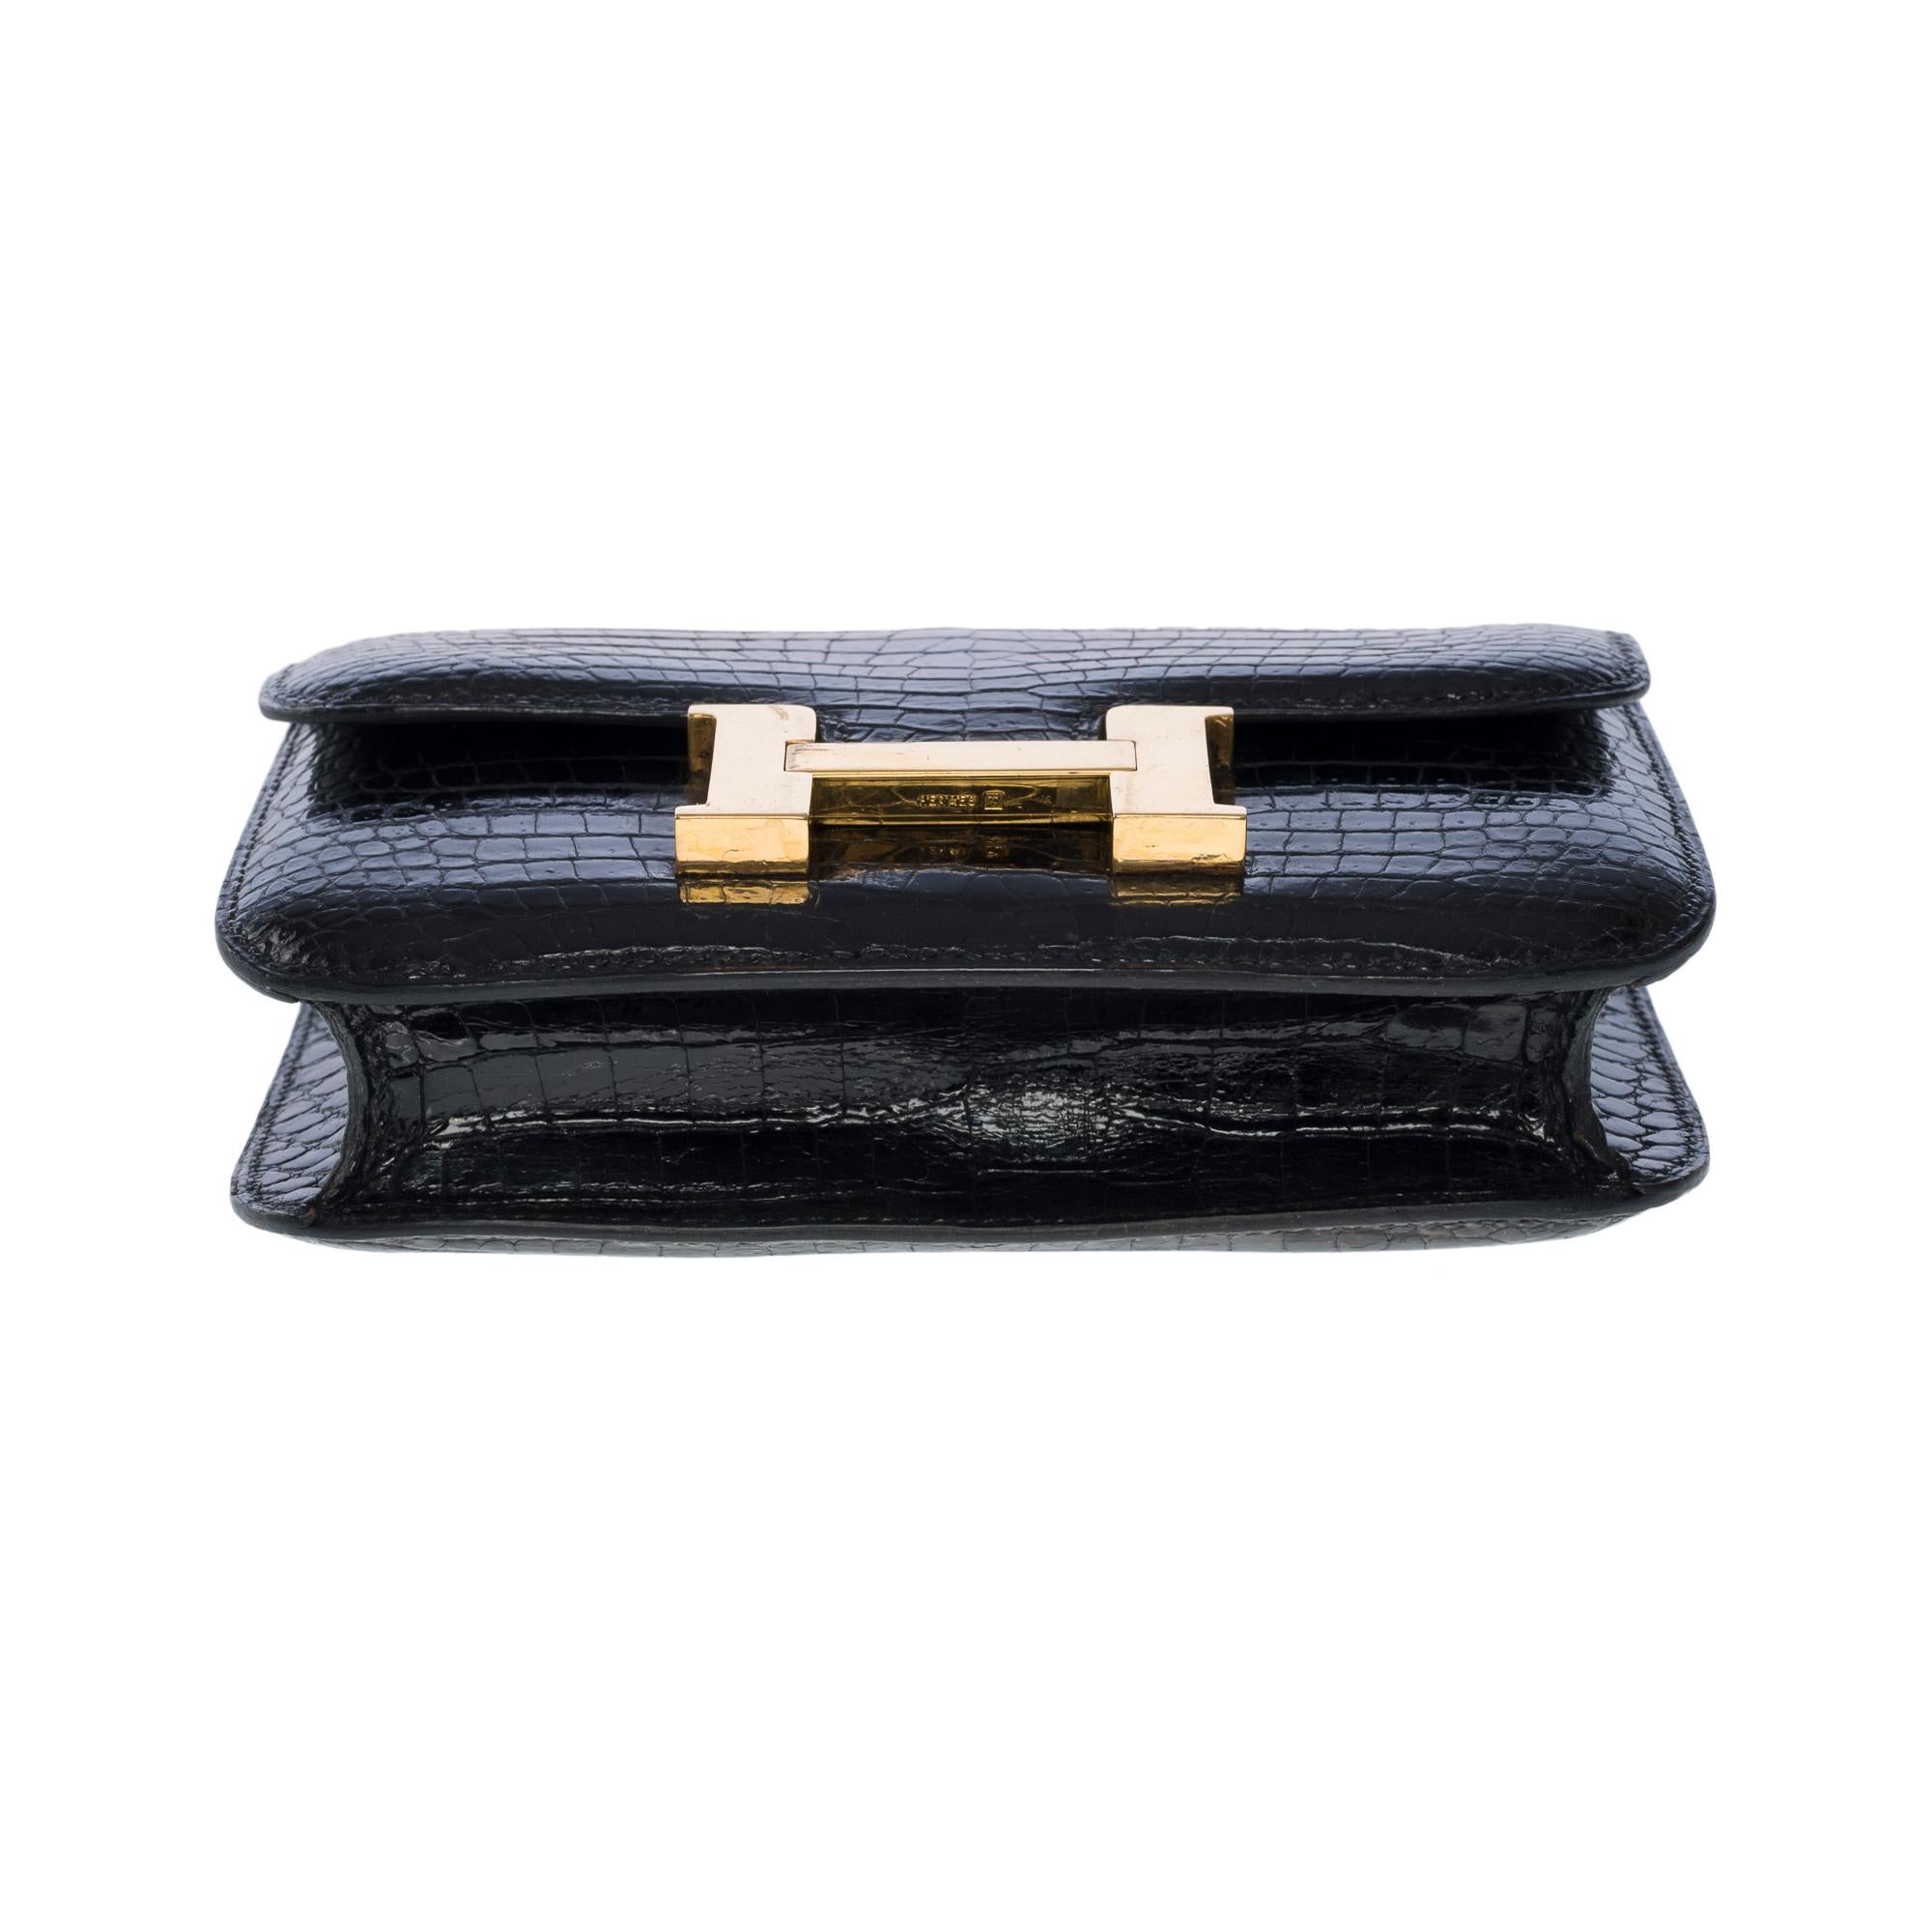 Sammlerstücke Hermès Constance Micro Clutch mit Klappe aus schwarzem Porosus-Krokodil, GHW 4